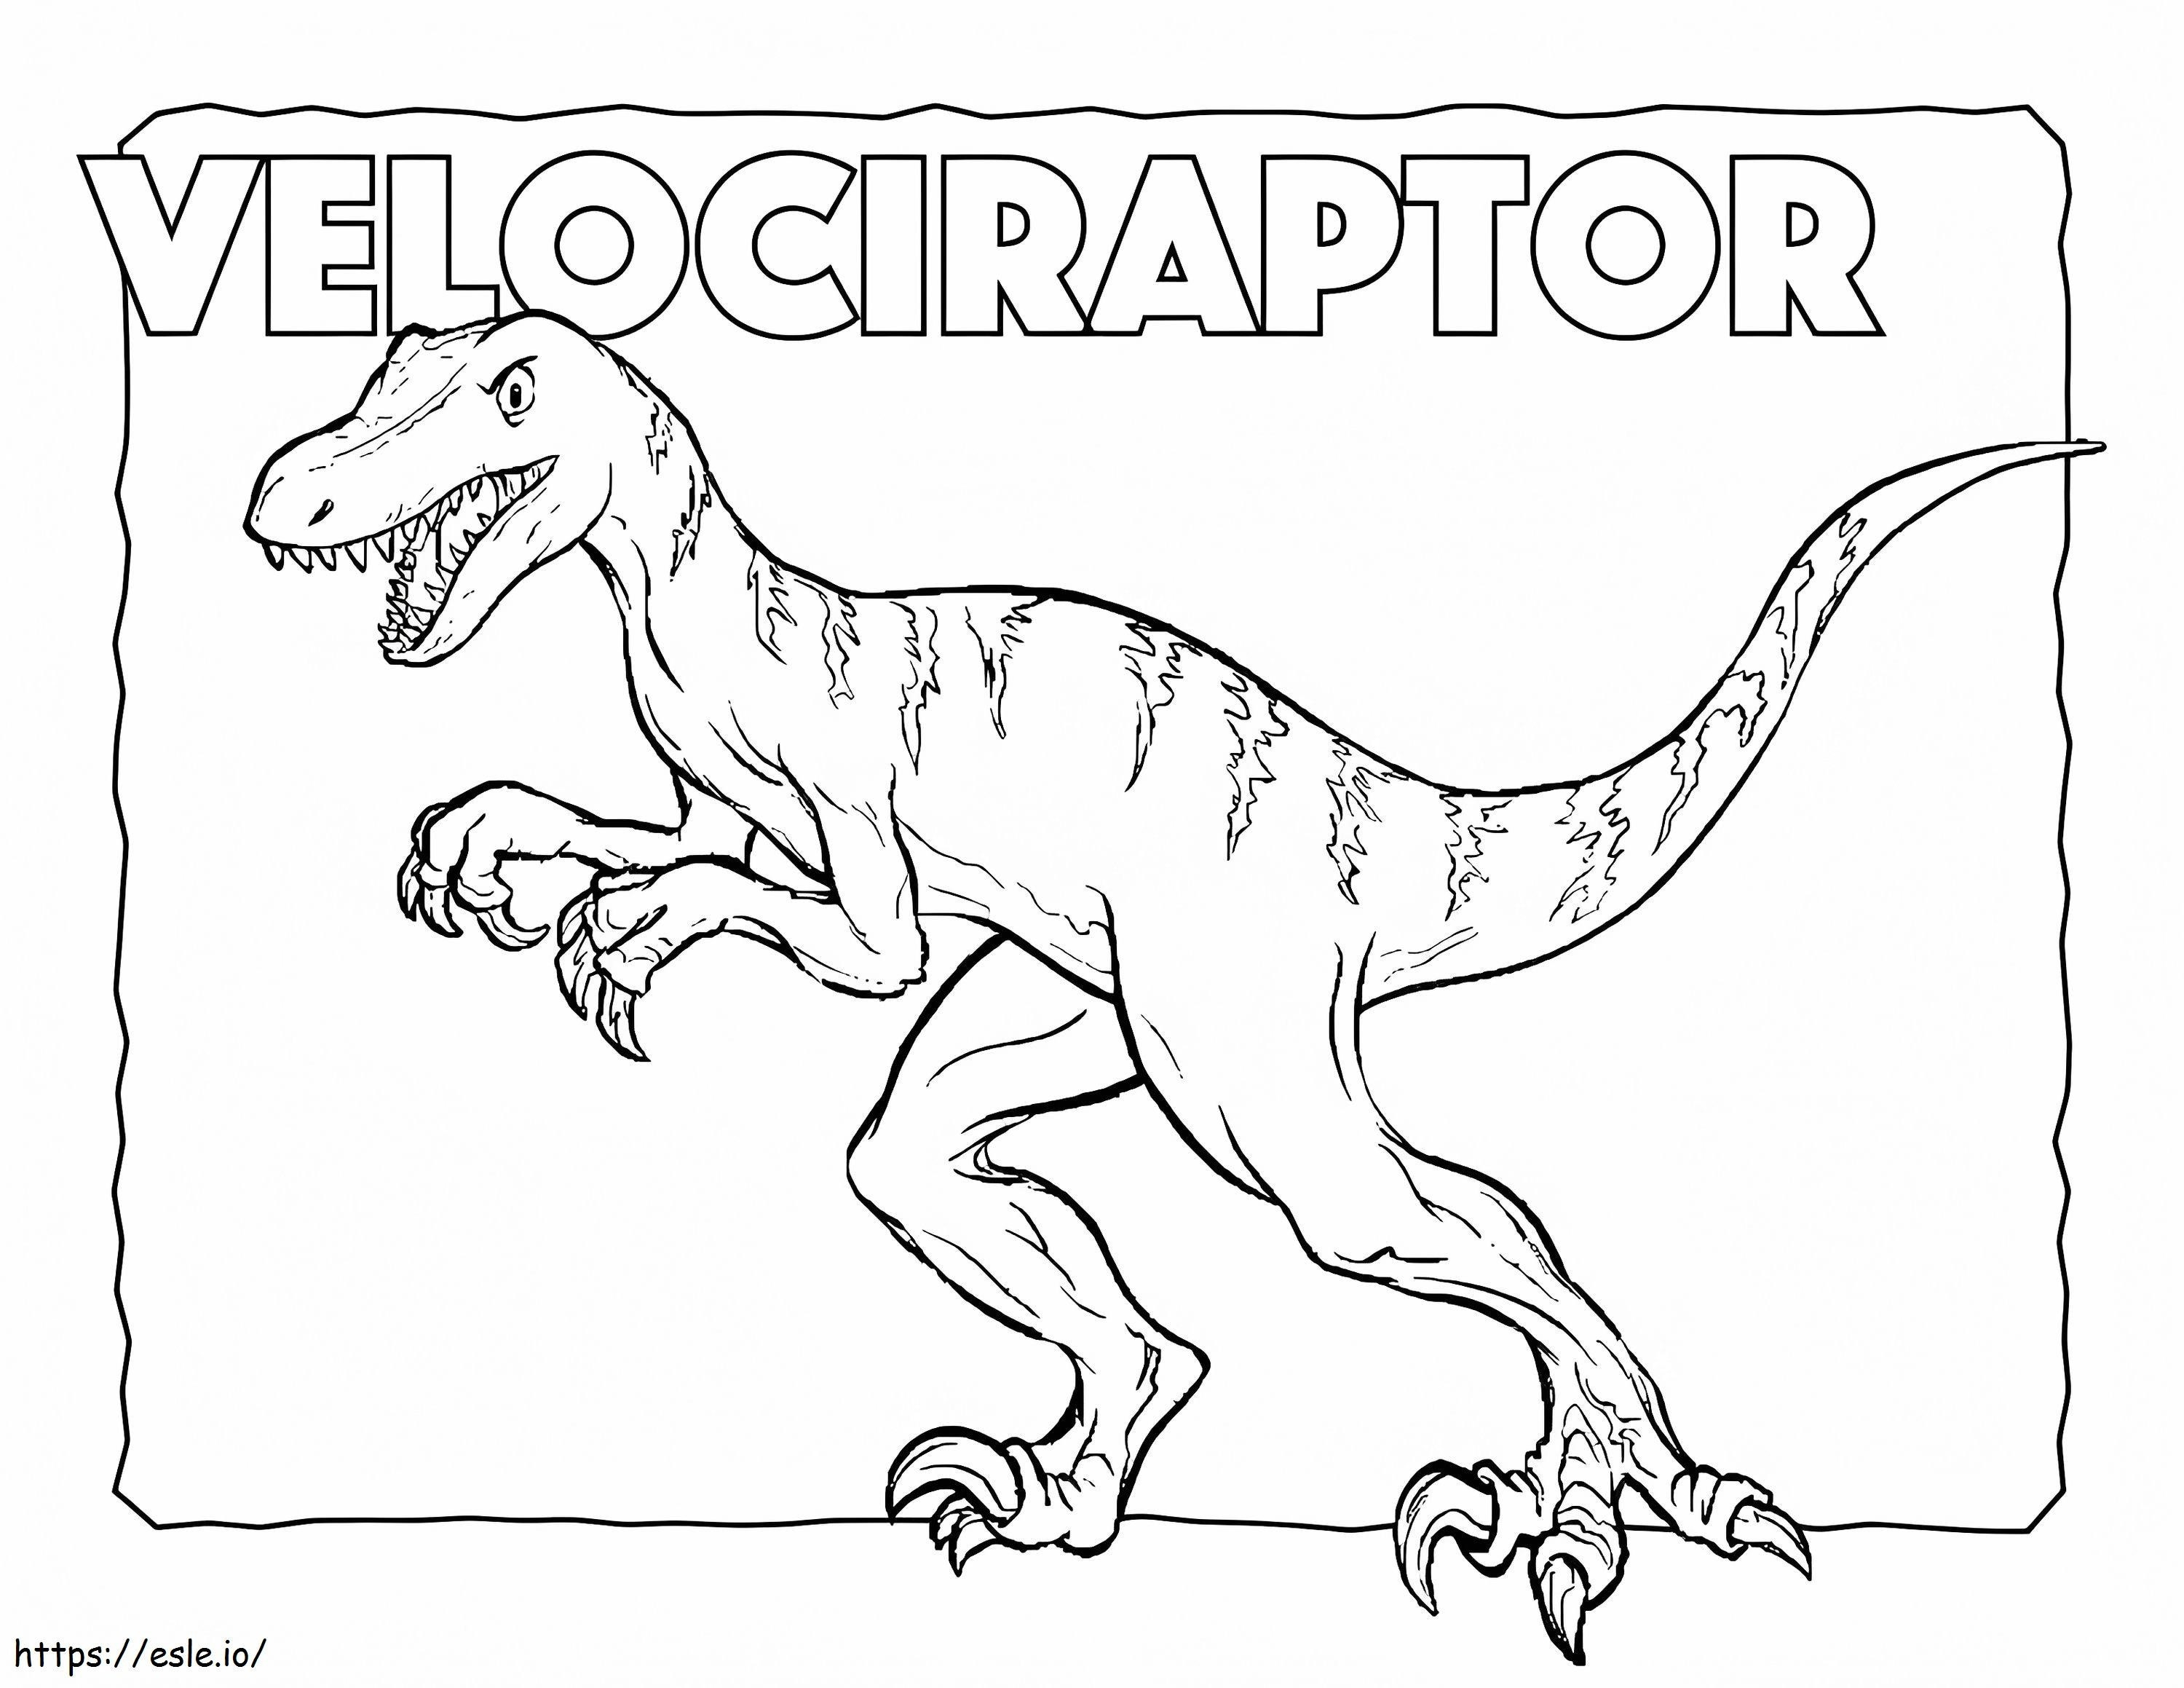 Welociraptor 8 kolorowanka